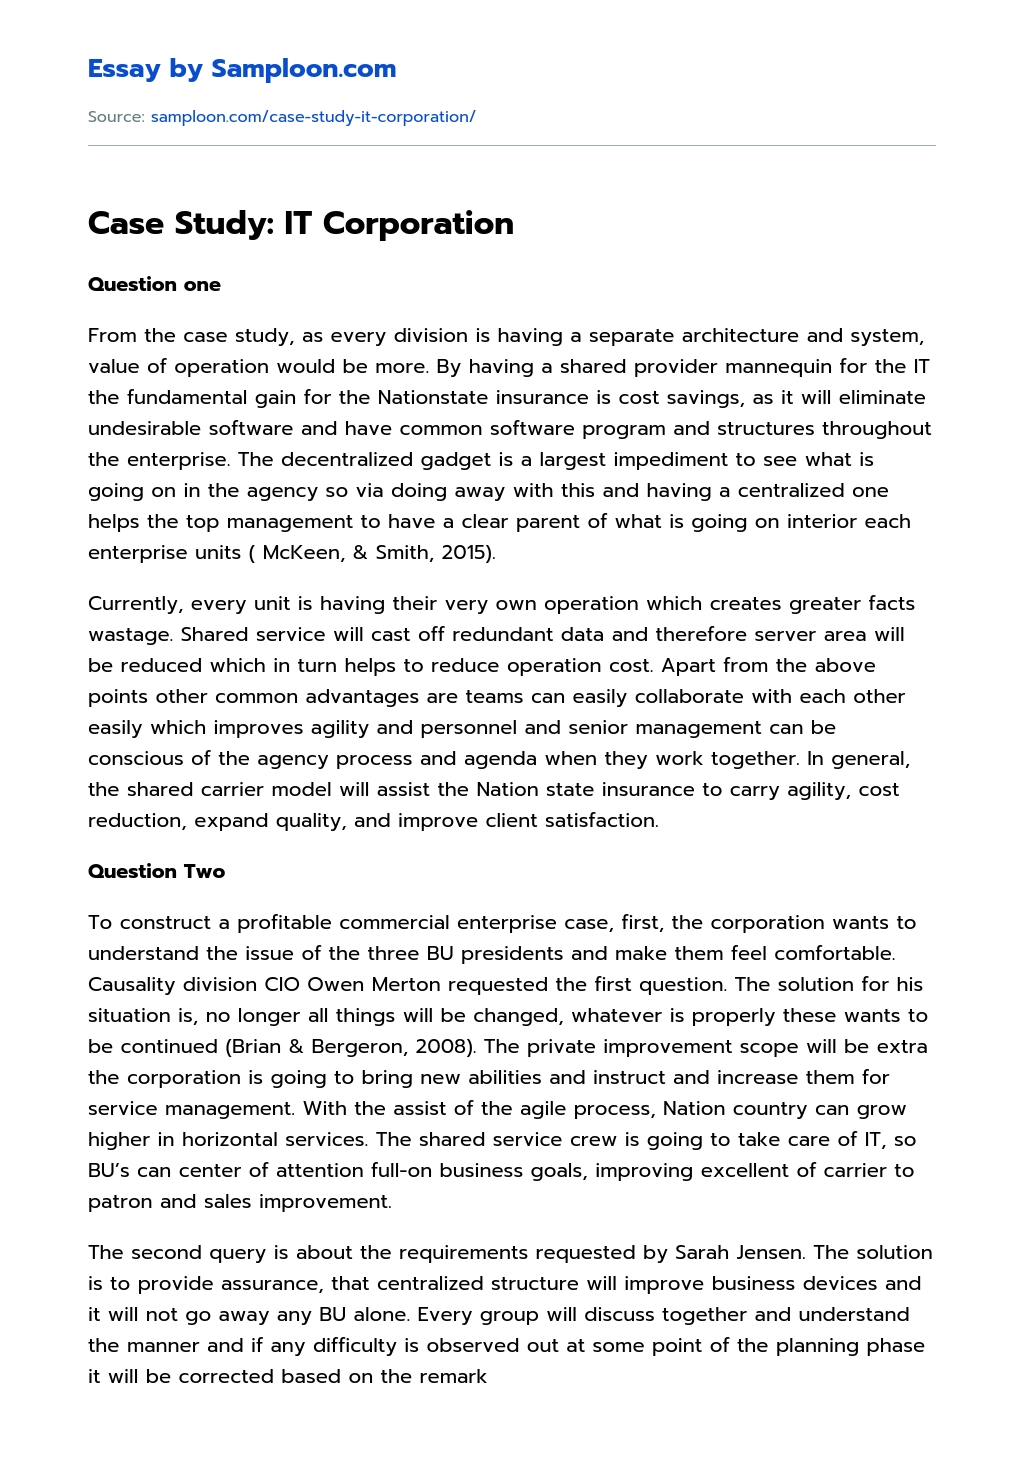 Case Study: IT Corporation essay